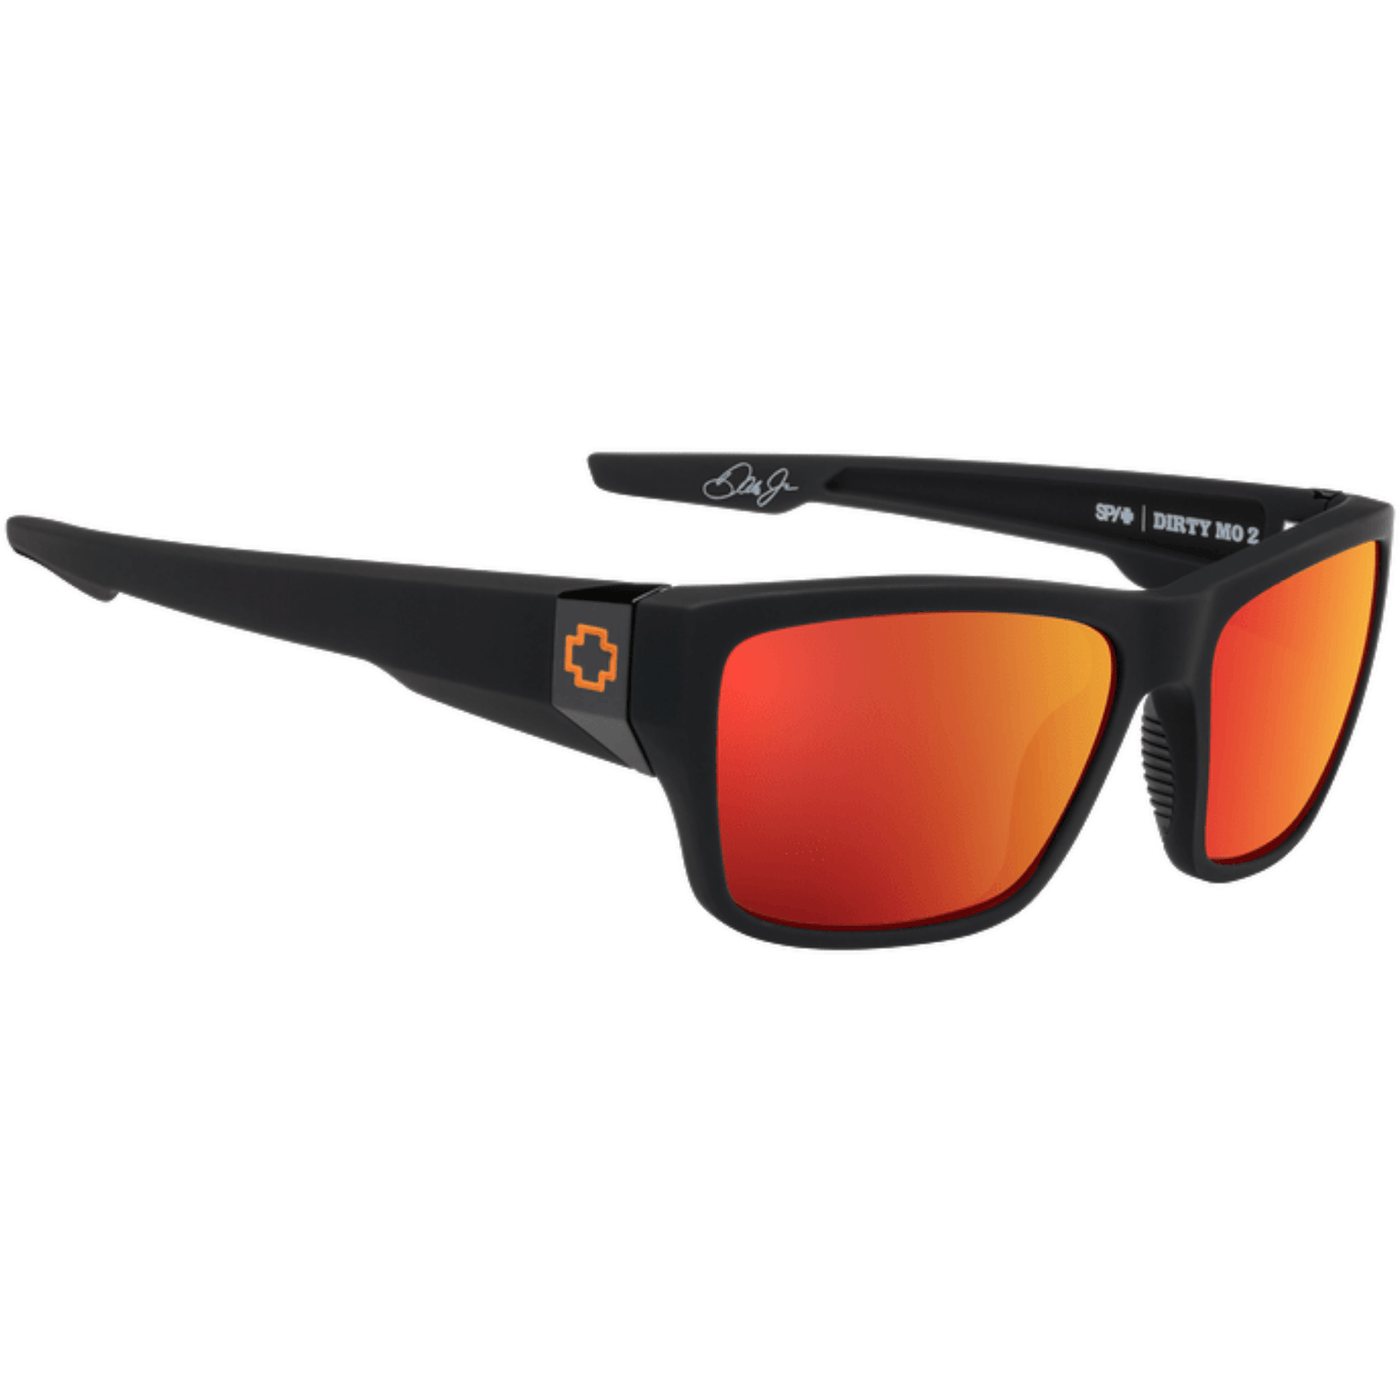 SPY DIRTY MO 2 Sunglasses, Happy Lens - Orange 8Lines Shop - Fast Shipping